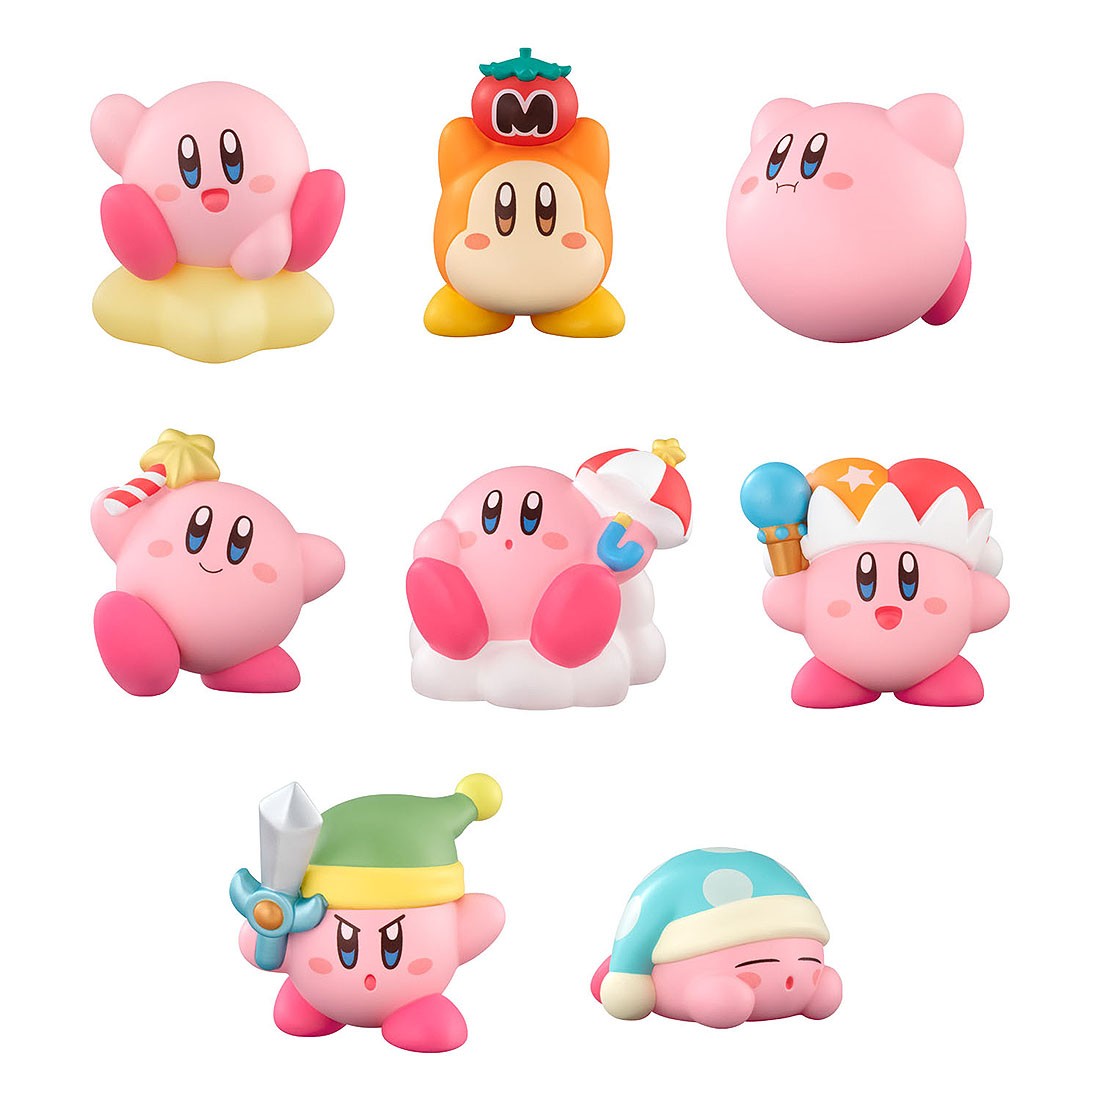 Bandai Shokugan Kirby's Dream Land Kirby Friends Set of 12 Figures (pink)